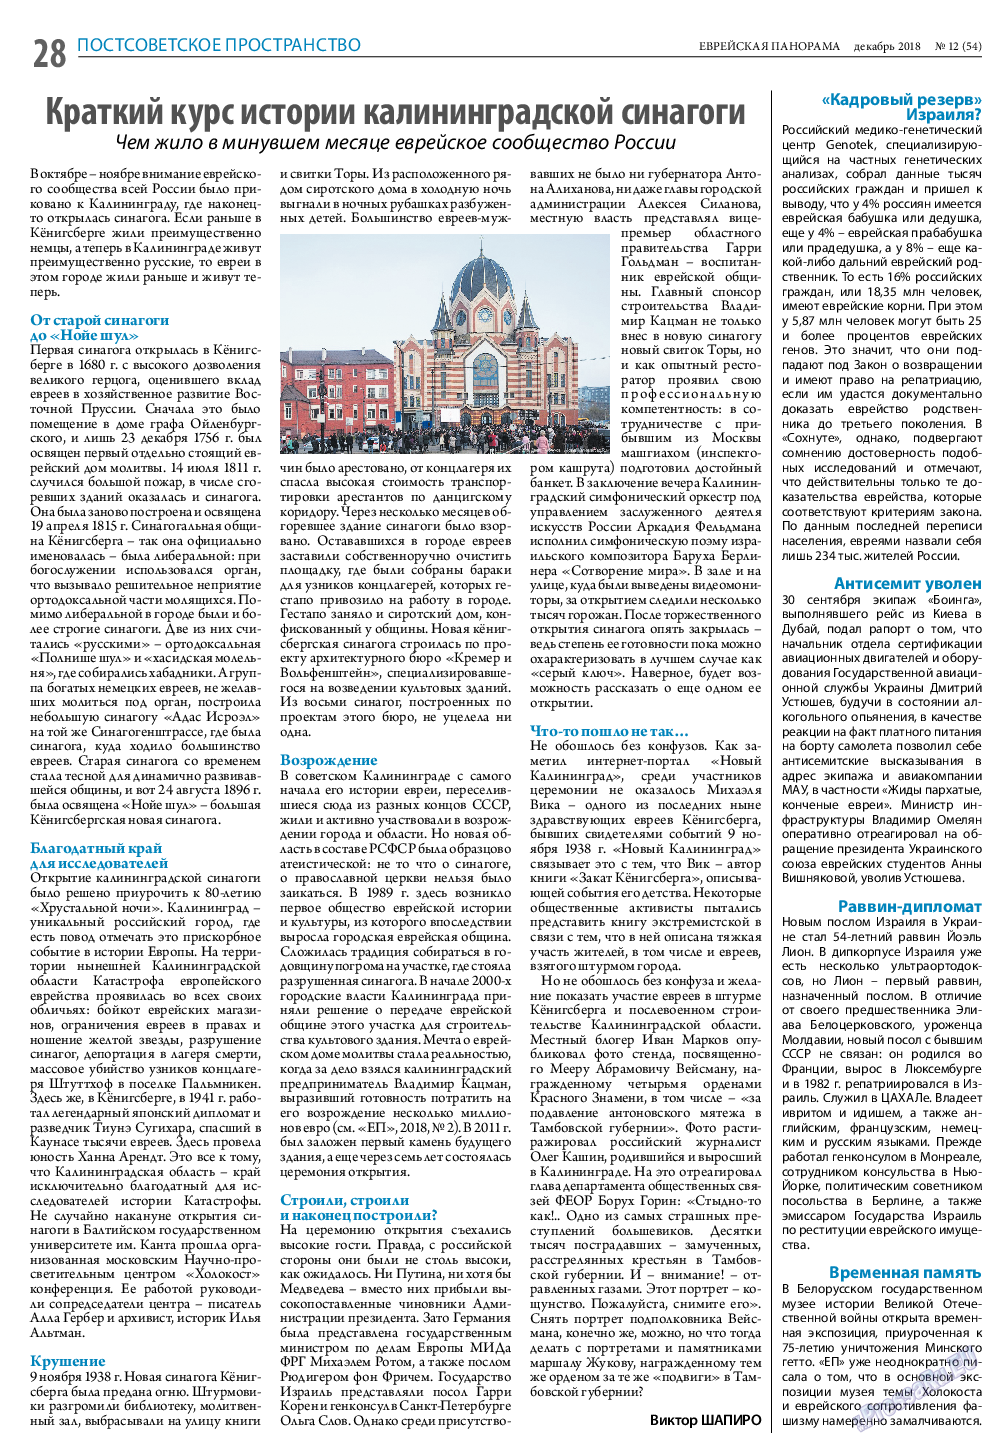 Еврейская панорама, газета. 2018 №12 стр.28